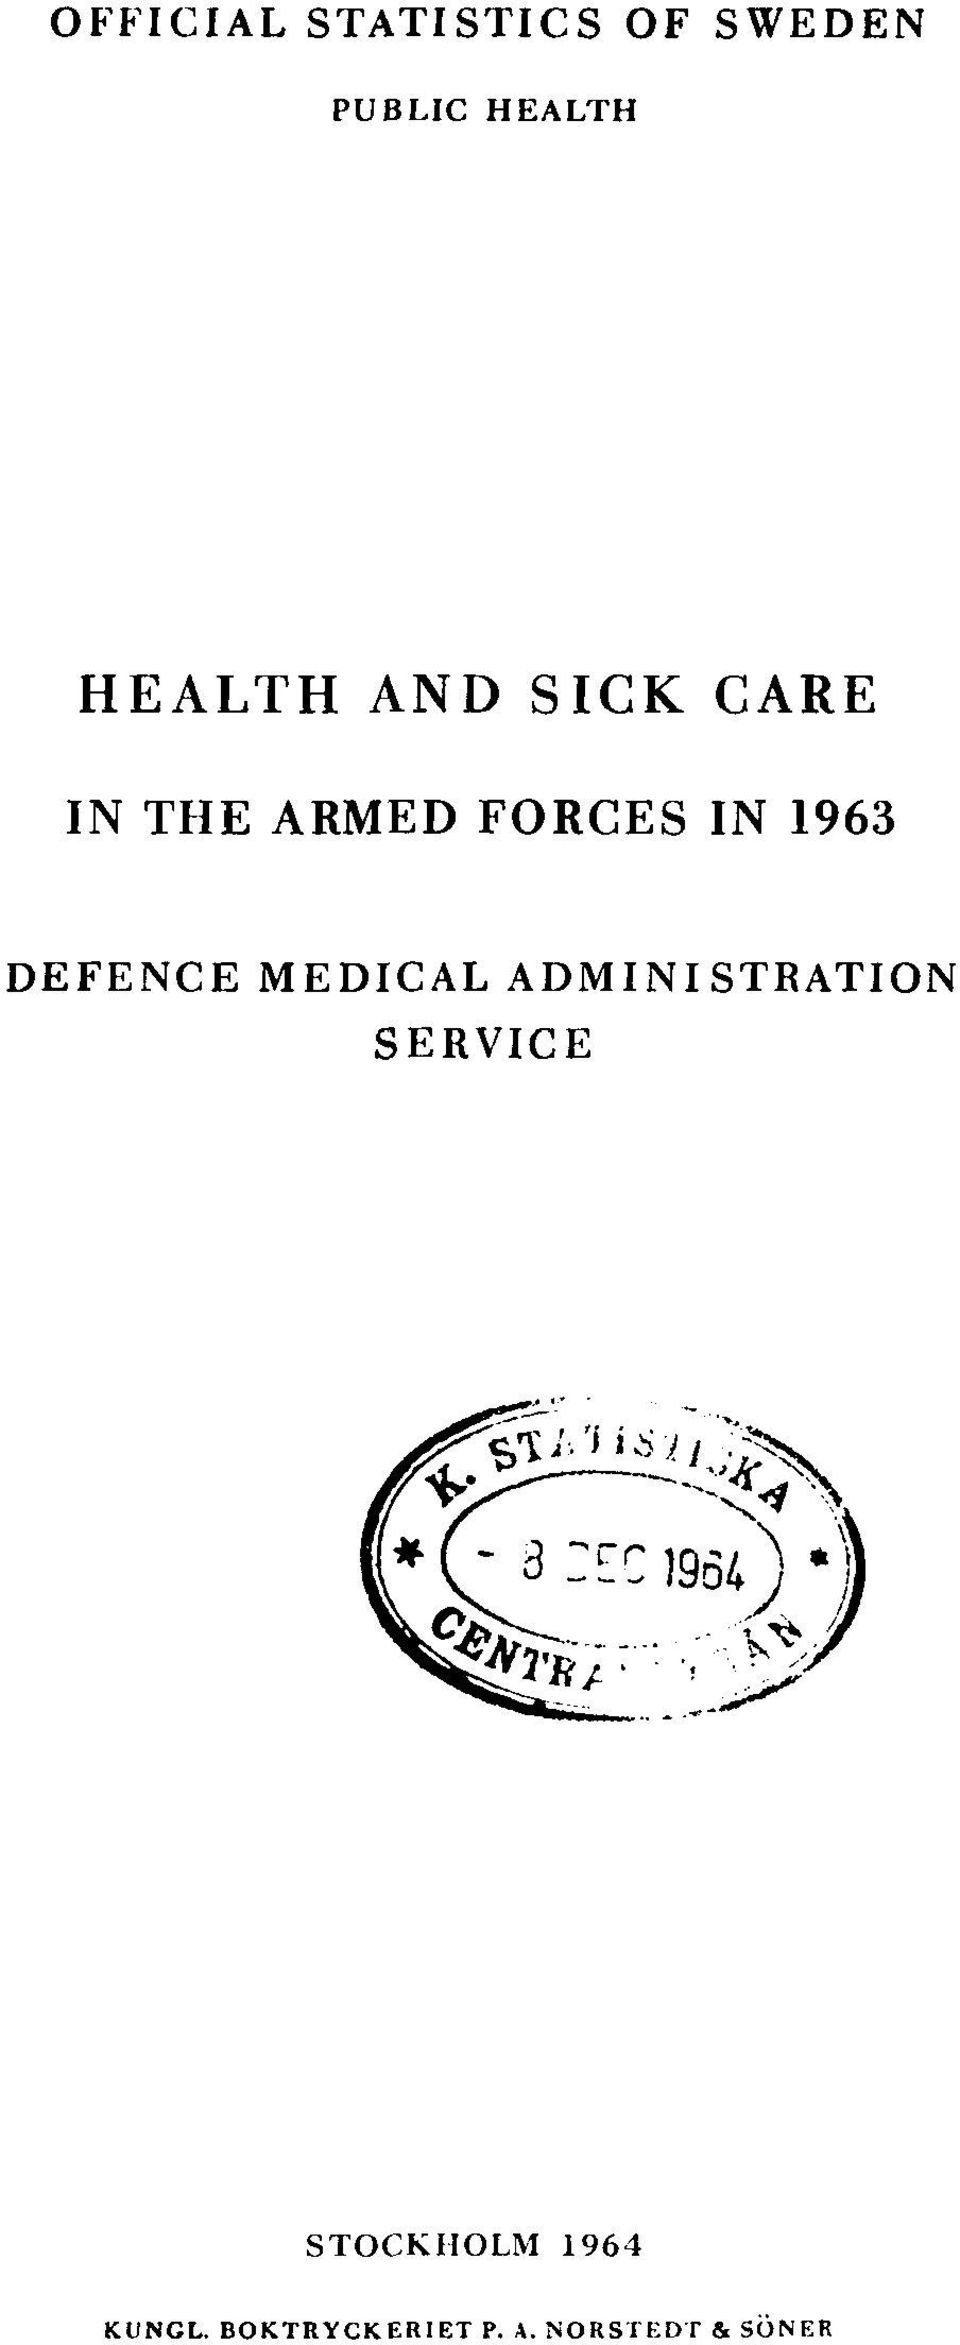 1963 DEFENCE MEDICAL ADMINISTRATION SERVICE